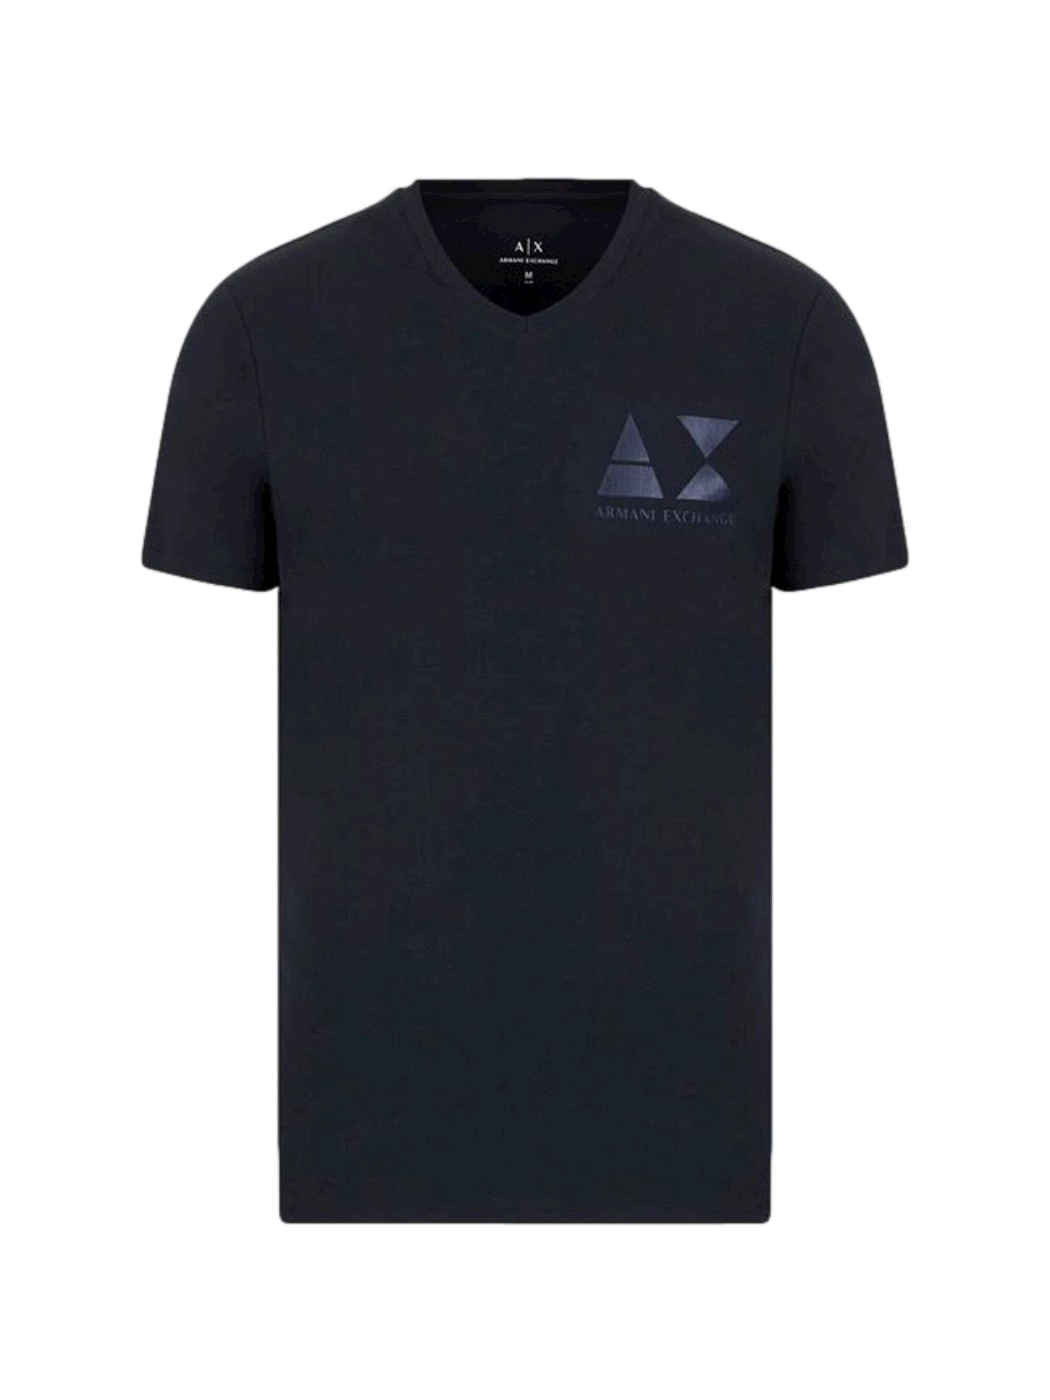 T-shirt with Armani Exchange logo